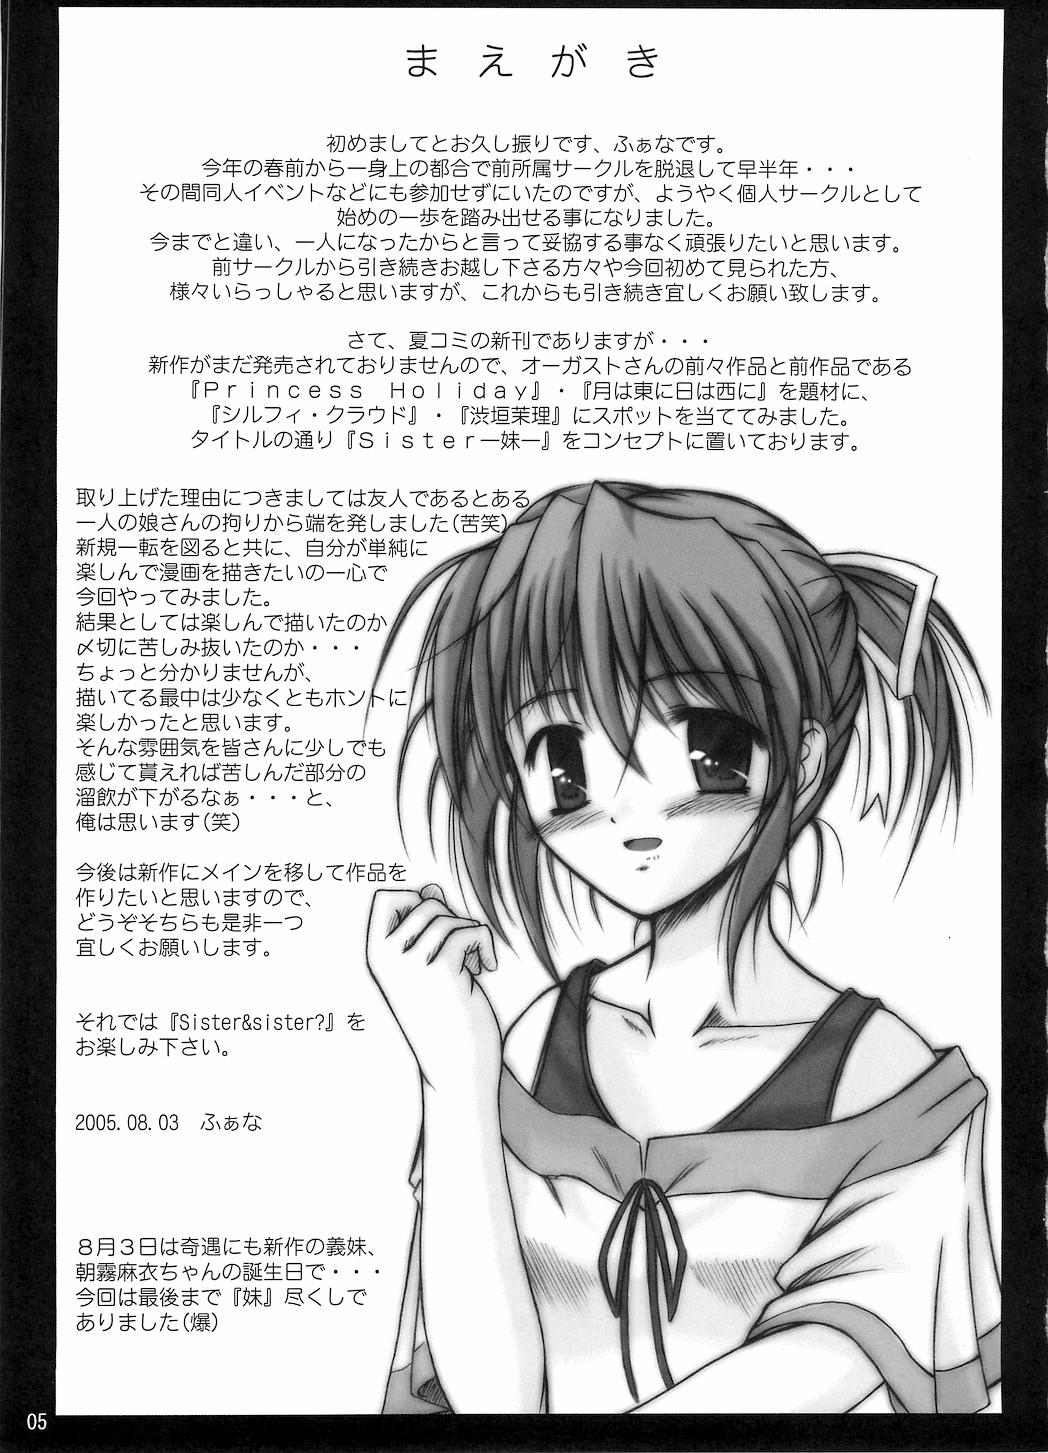 Punished Sister & sister? - Tsuki wa higashi ni hi wa nishi ni Princess holiday Blackcock - Page 3